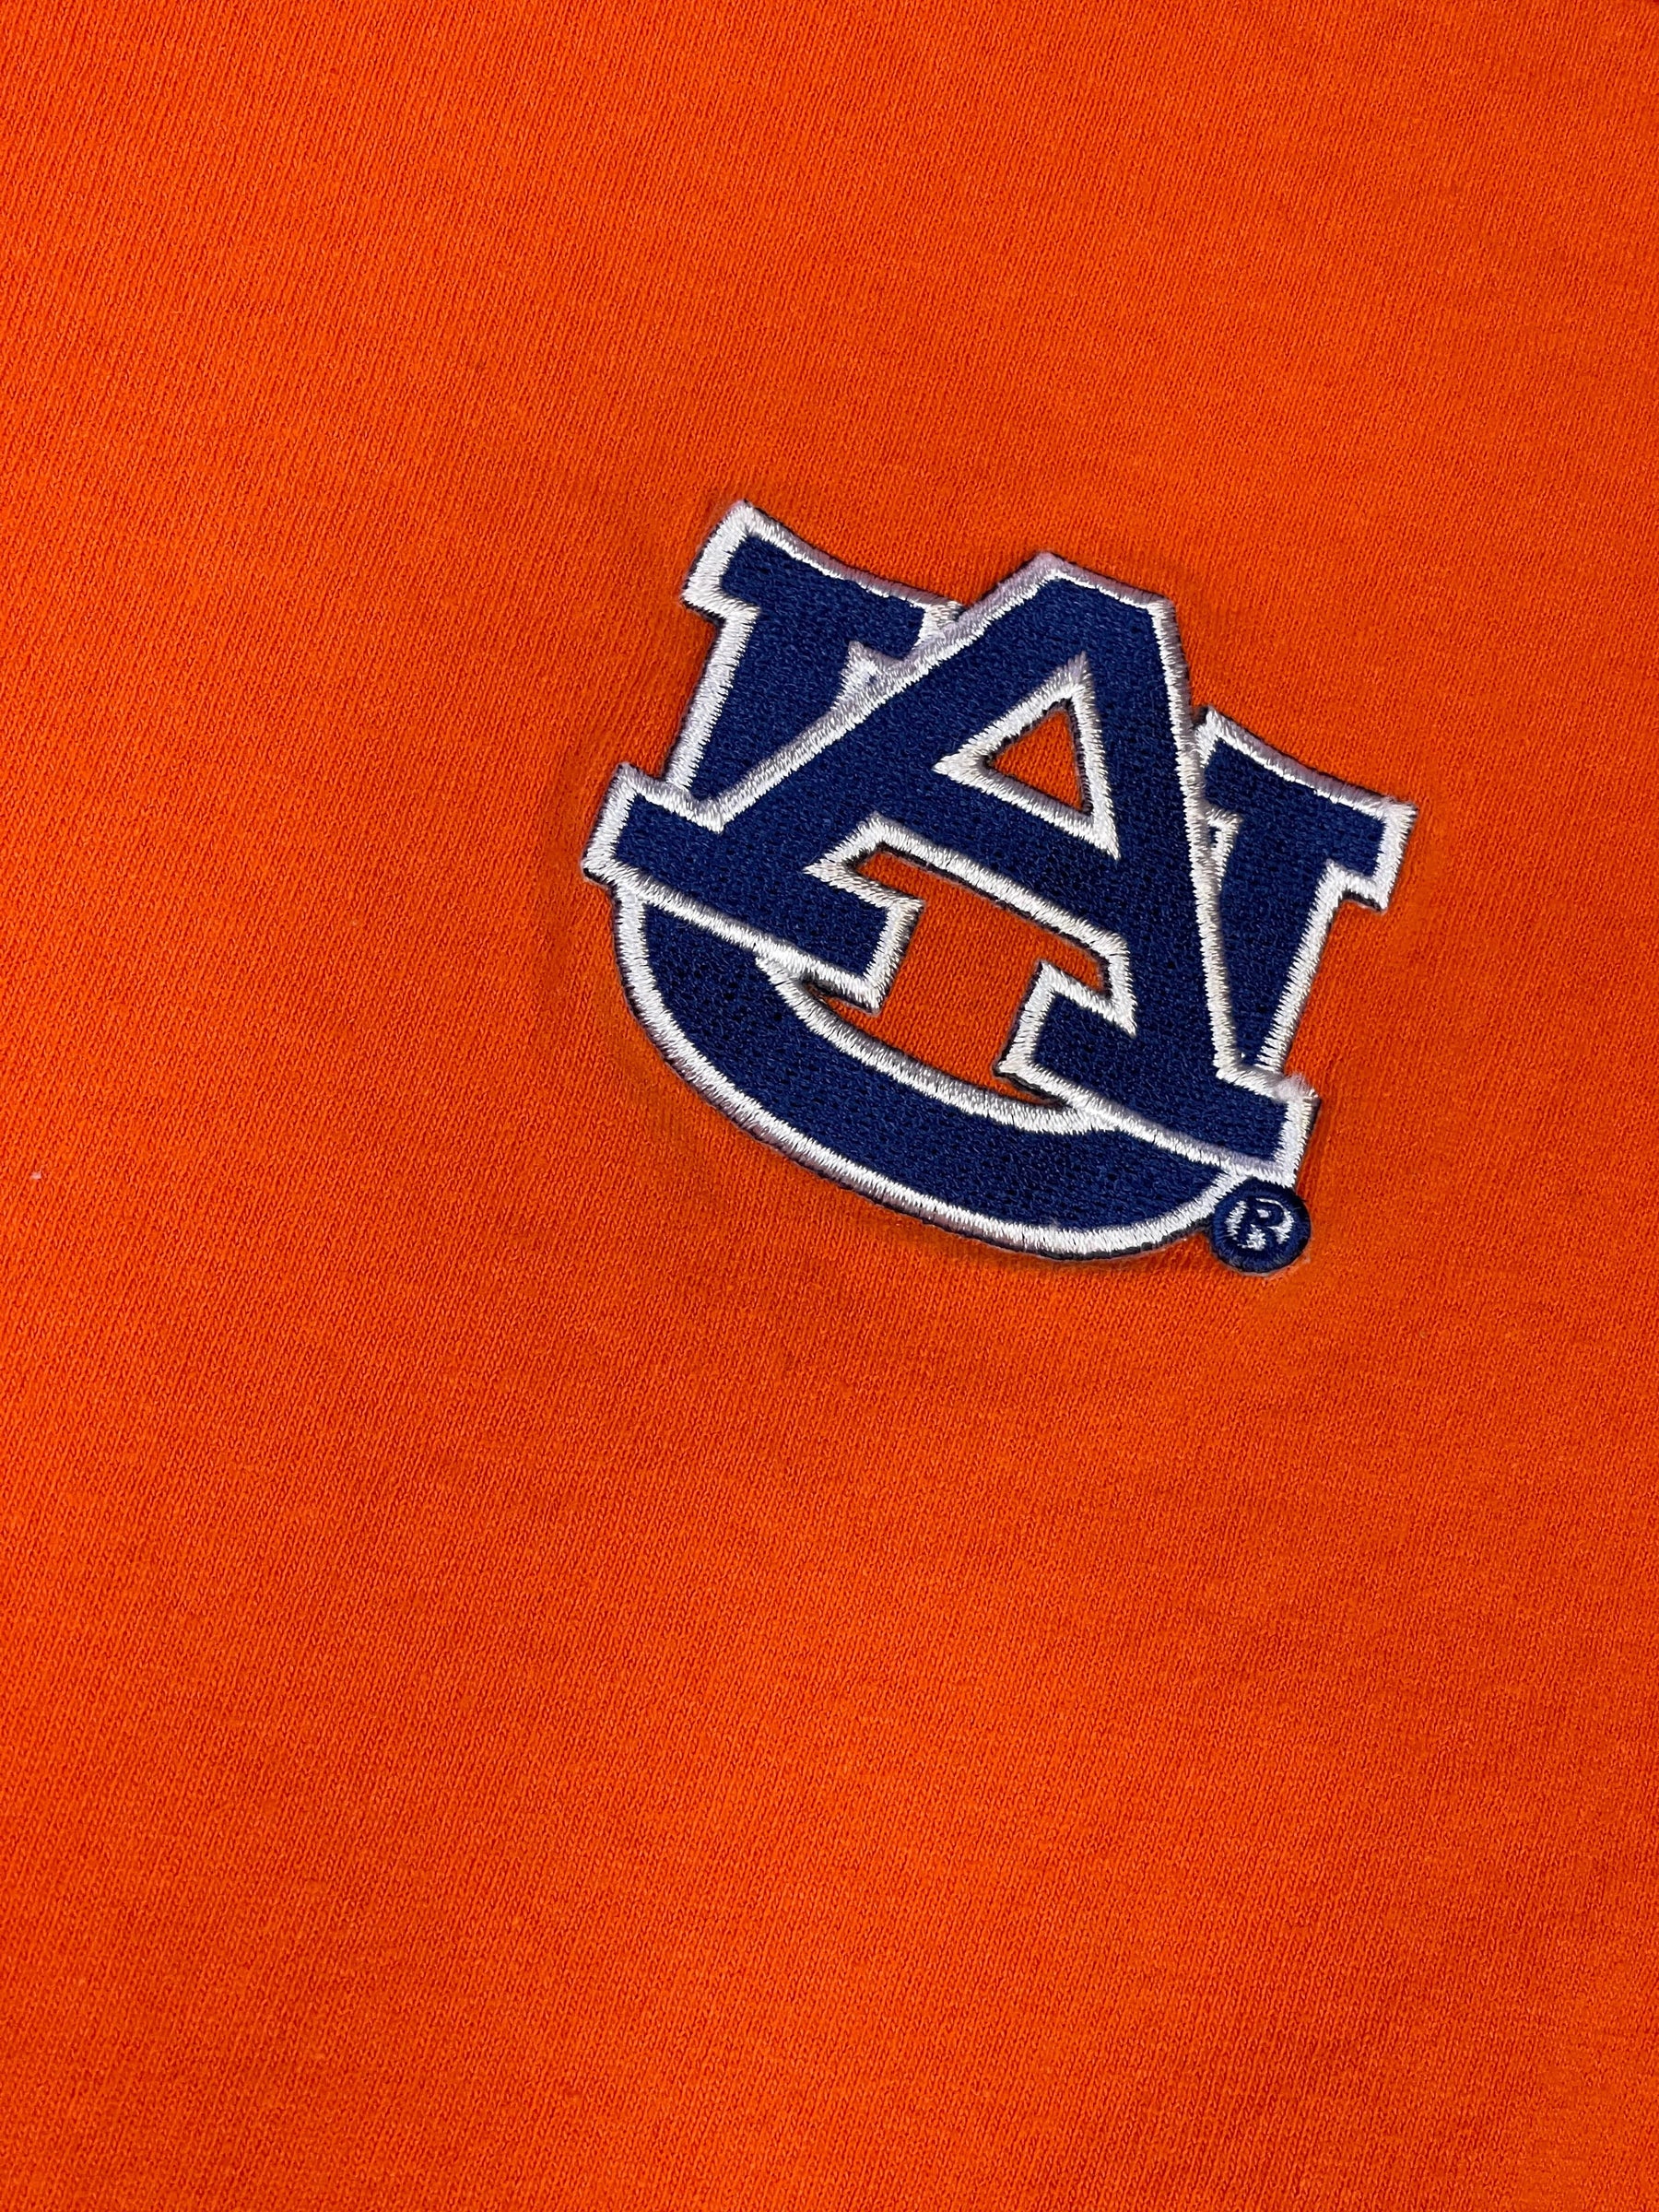 NCAA Auburn Tigers 100% Cotton T-Shirt Youth X-Small 4